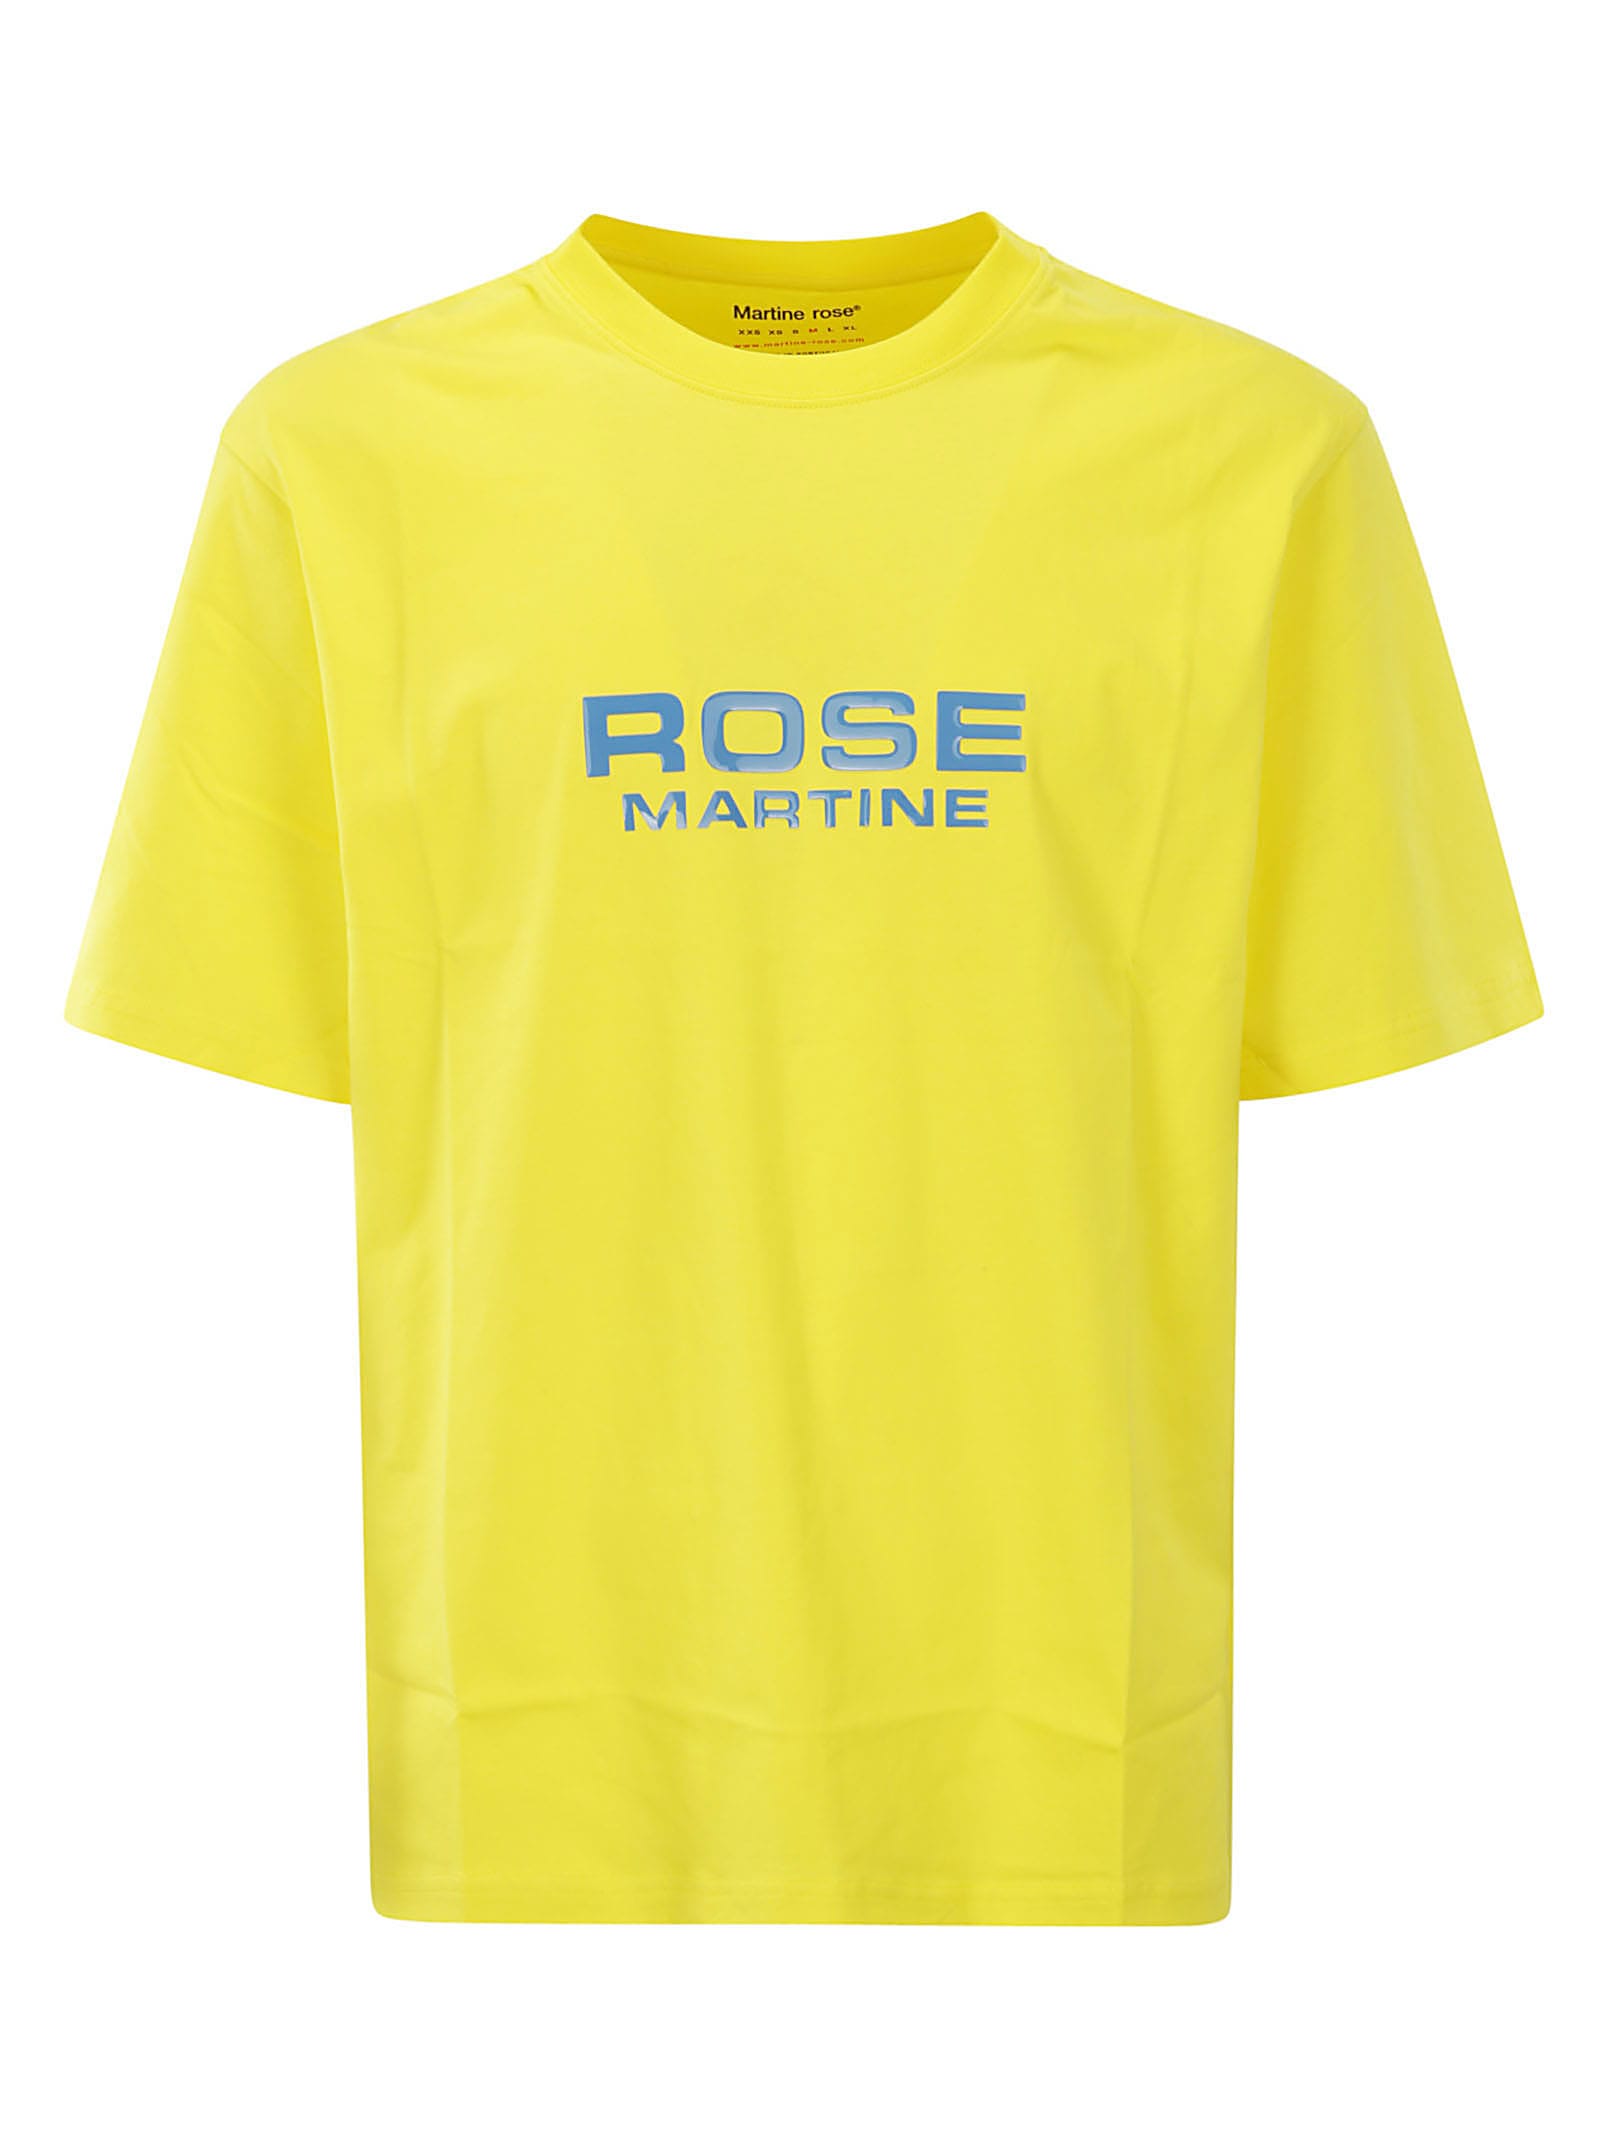 MARTINE ROSE CLASSIC T-SHIRT